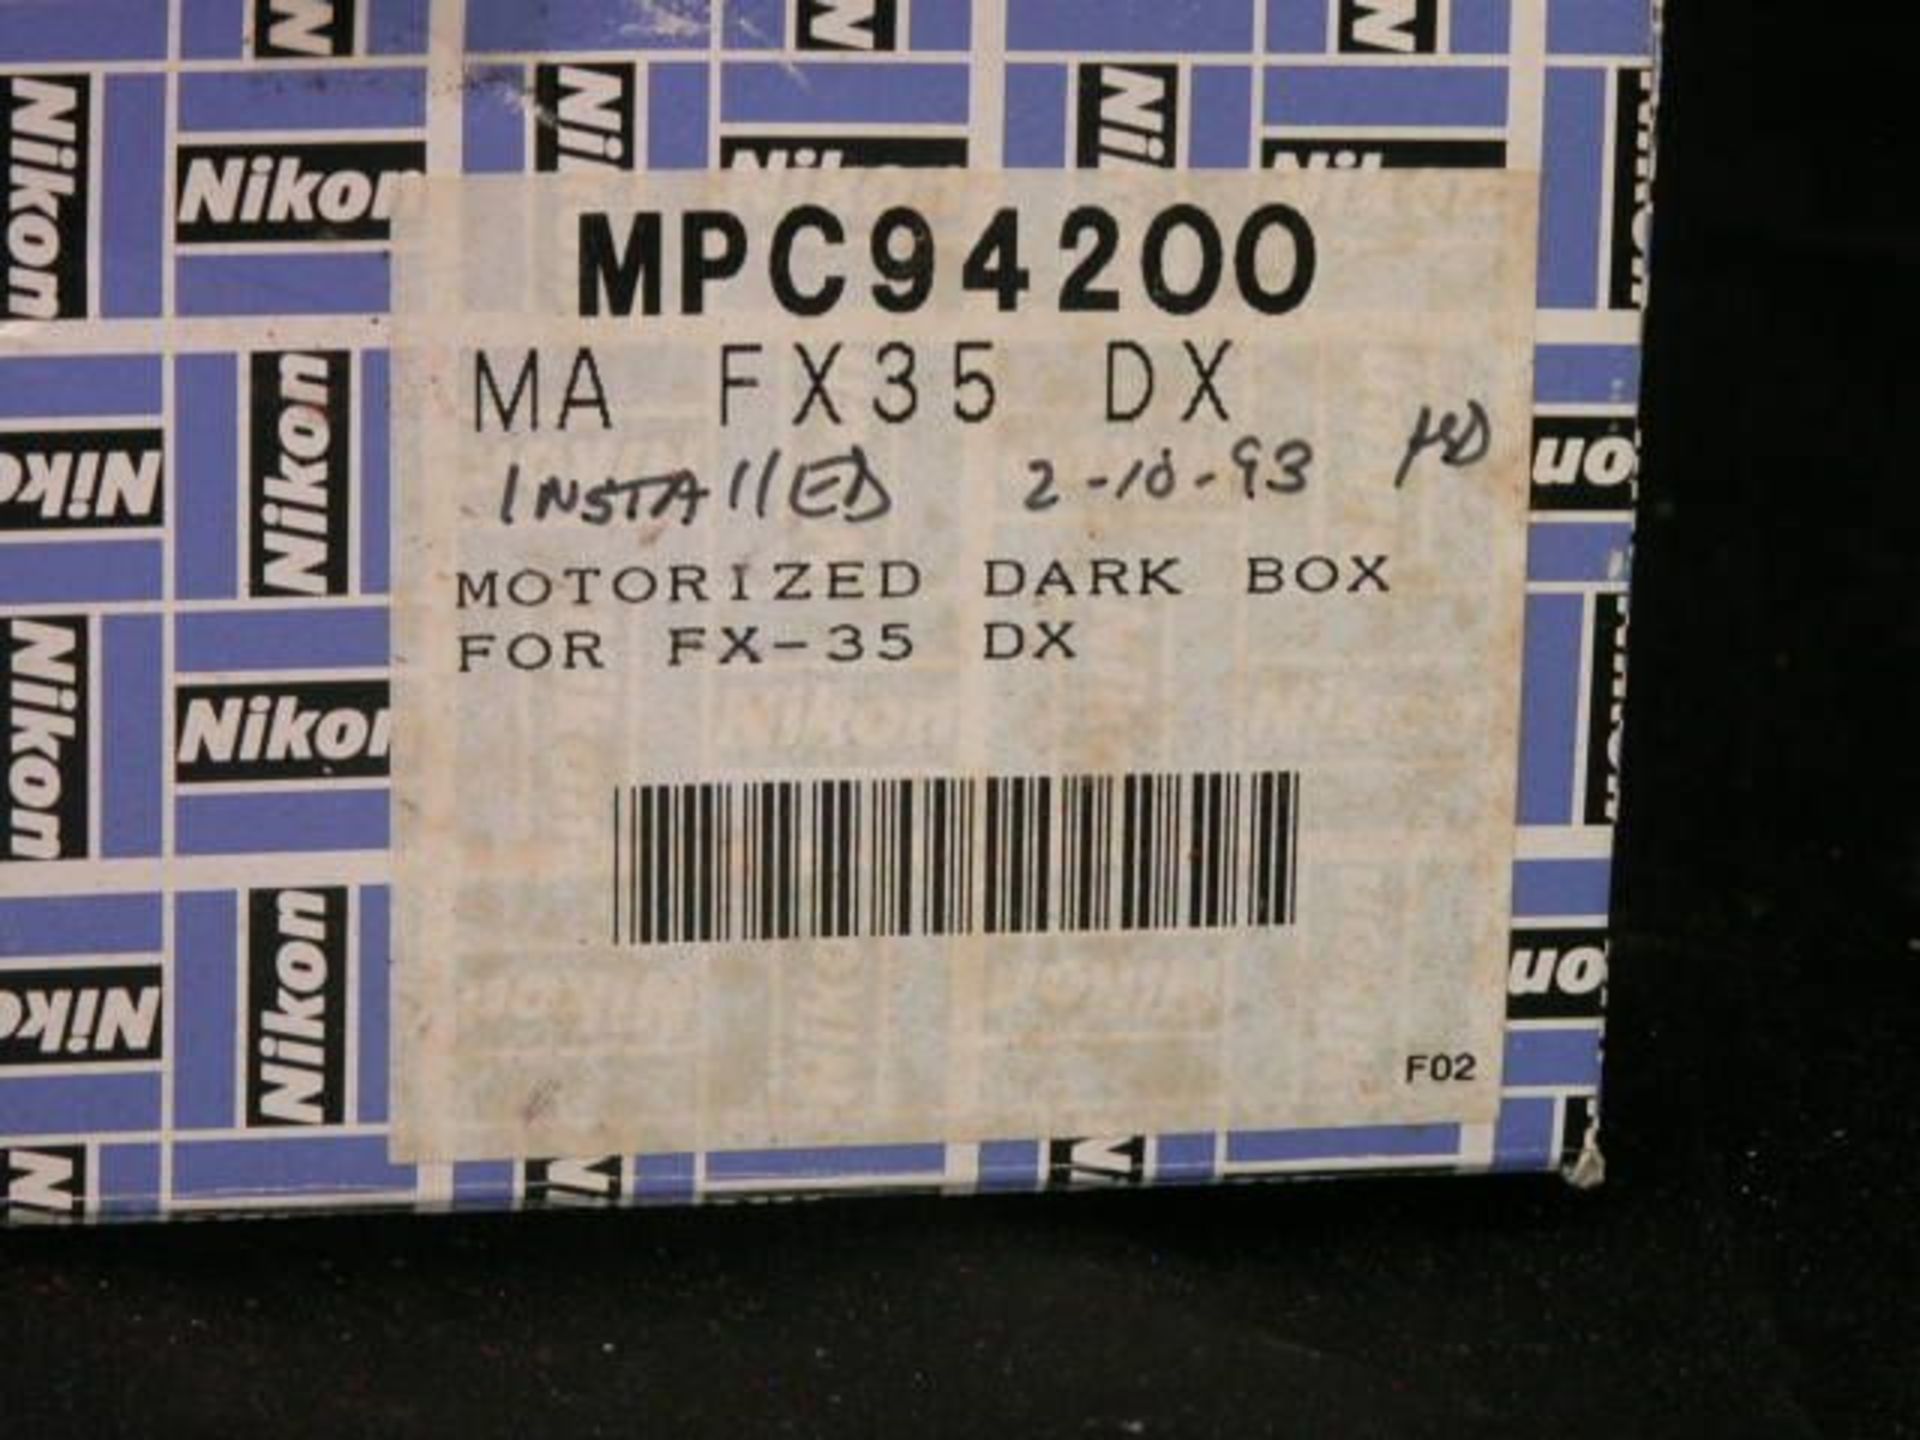 Nikon Microscope Camera FX-35A W/ MA FX-35 DX Motorized Dark Box, Qty 2, 222142342214 - Image 2 of 4